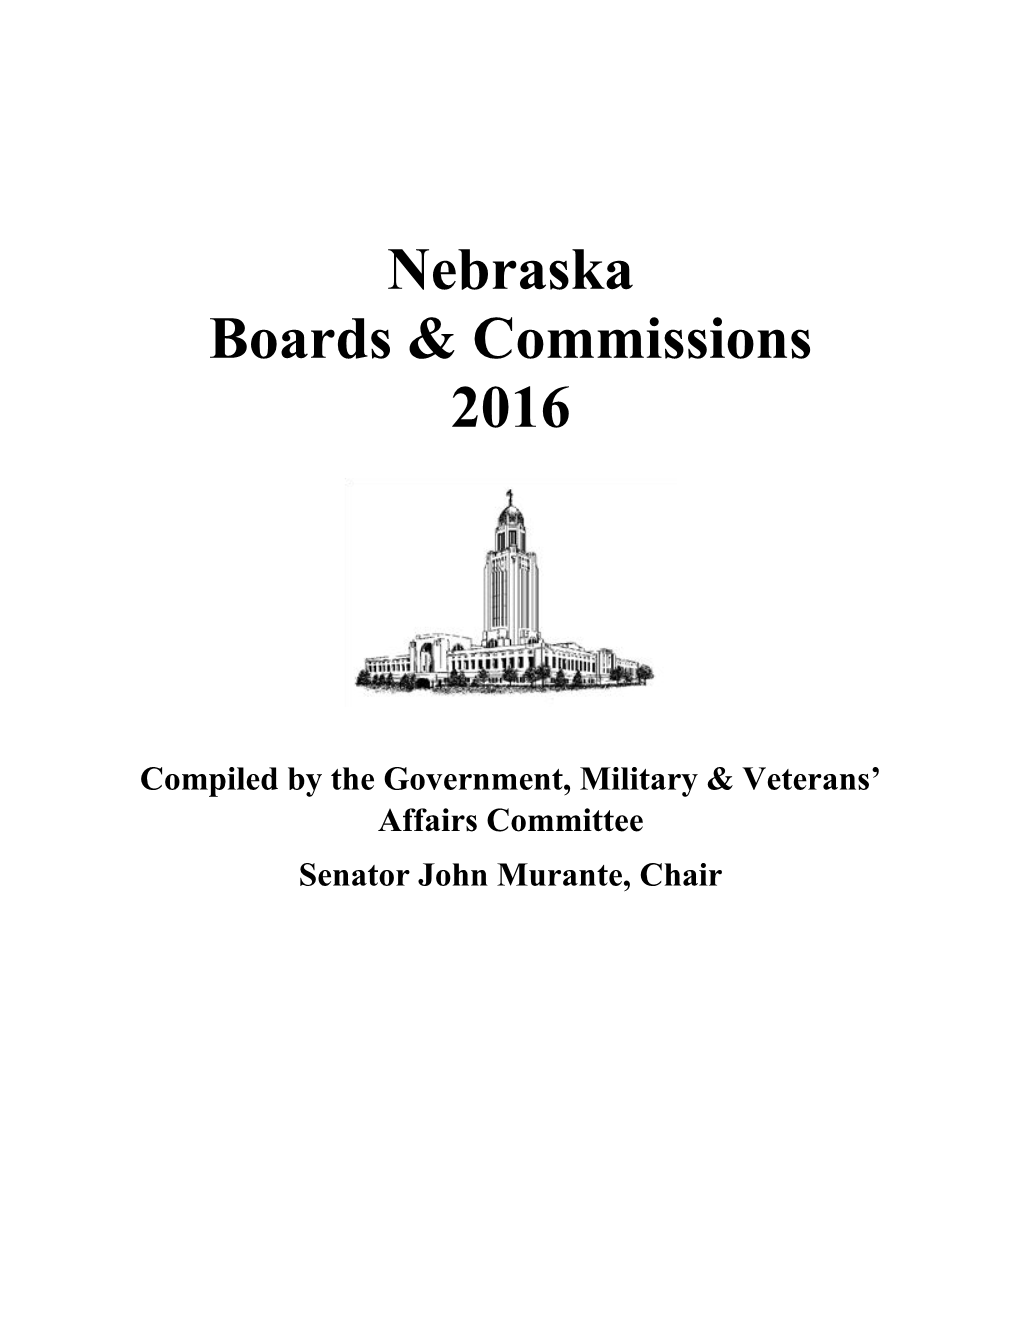 Nebraska Boards & Commissions 2016